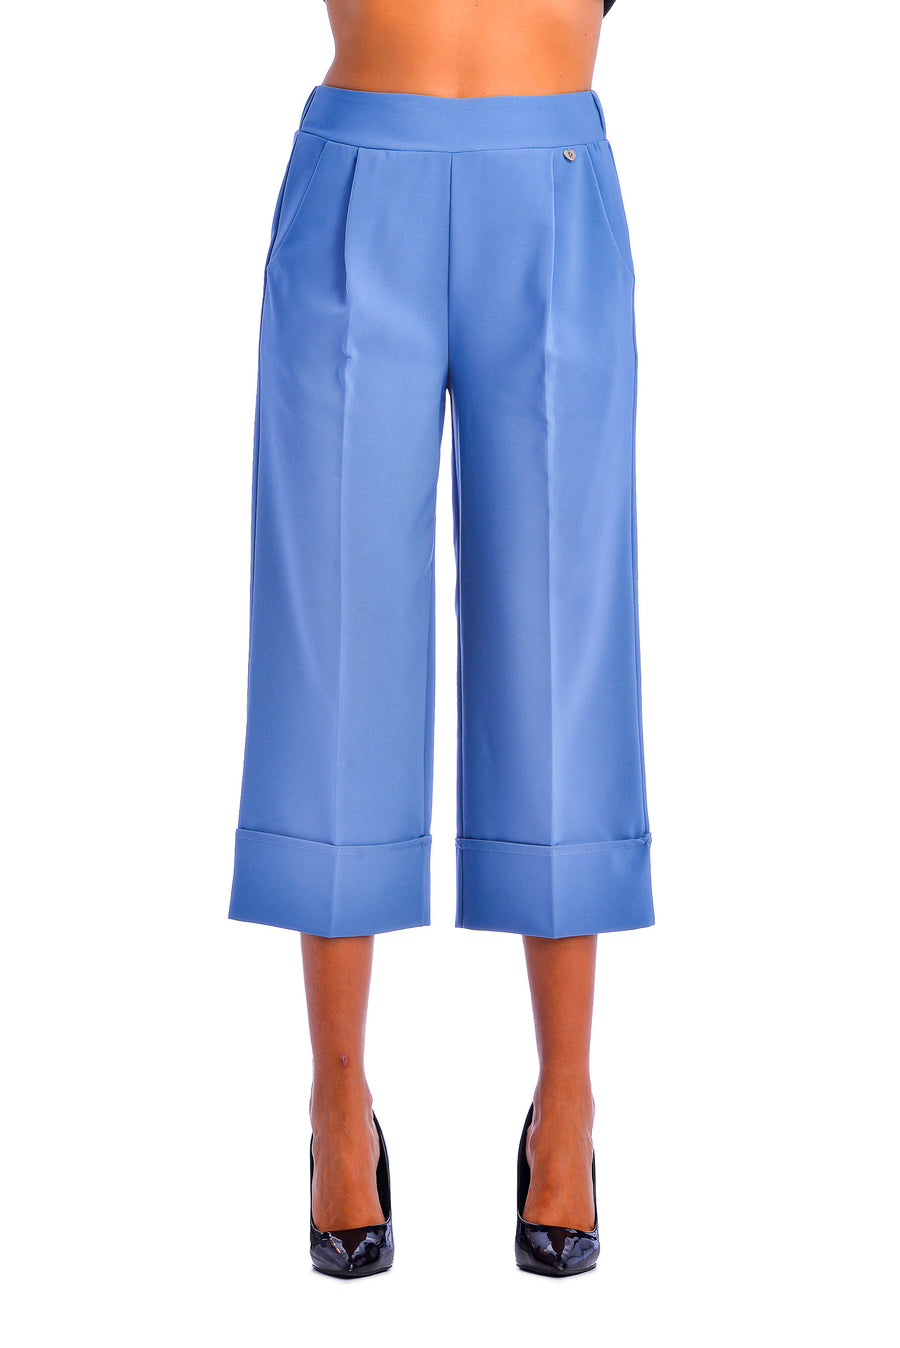 Pantalone cropped azzurro polvere